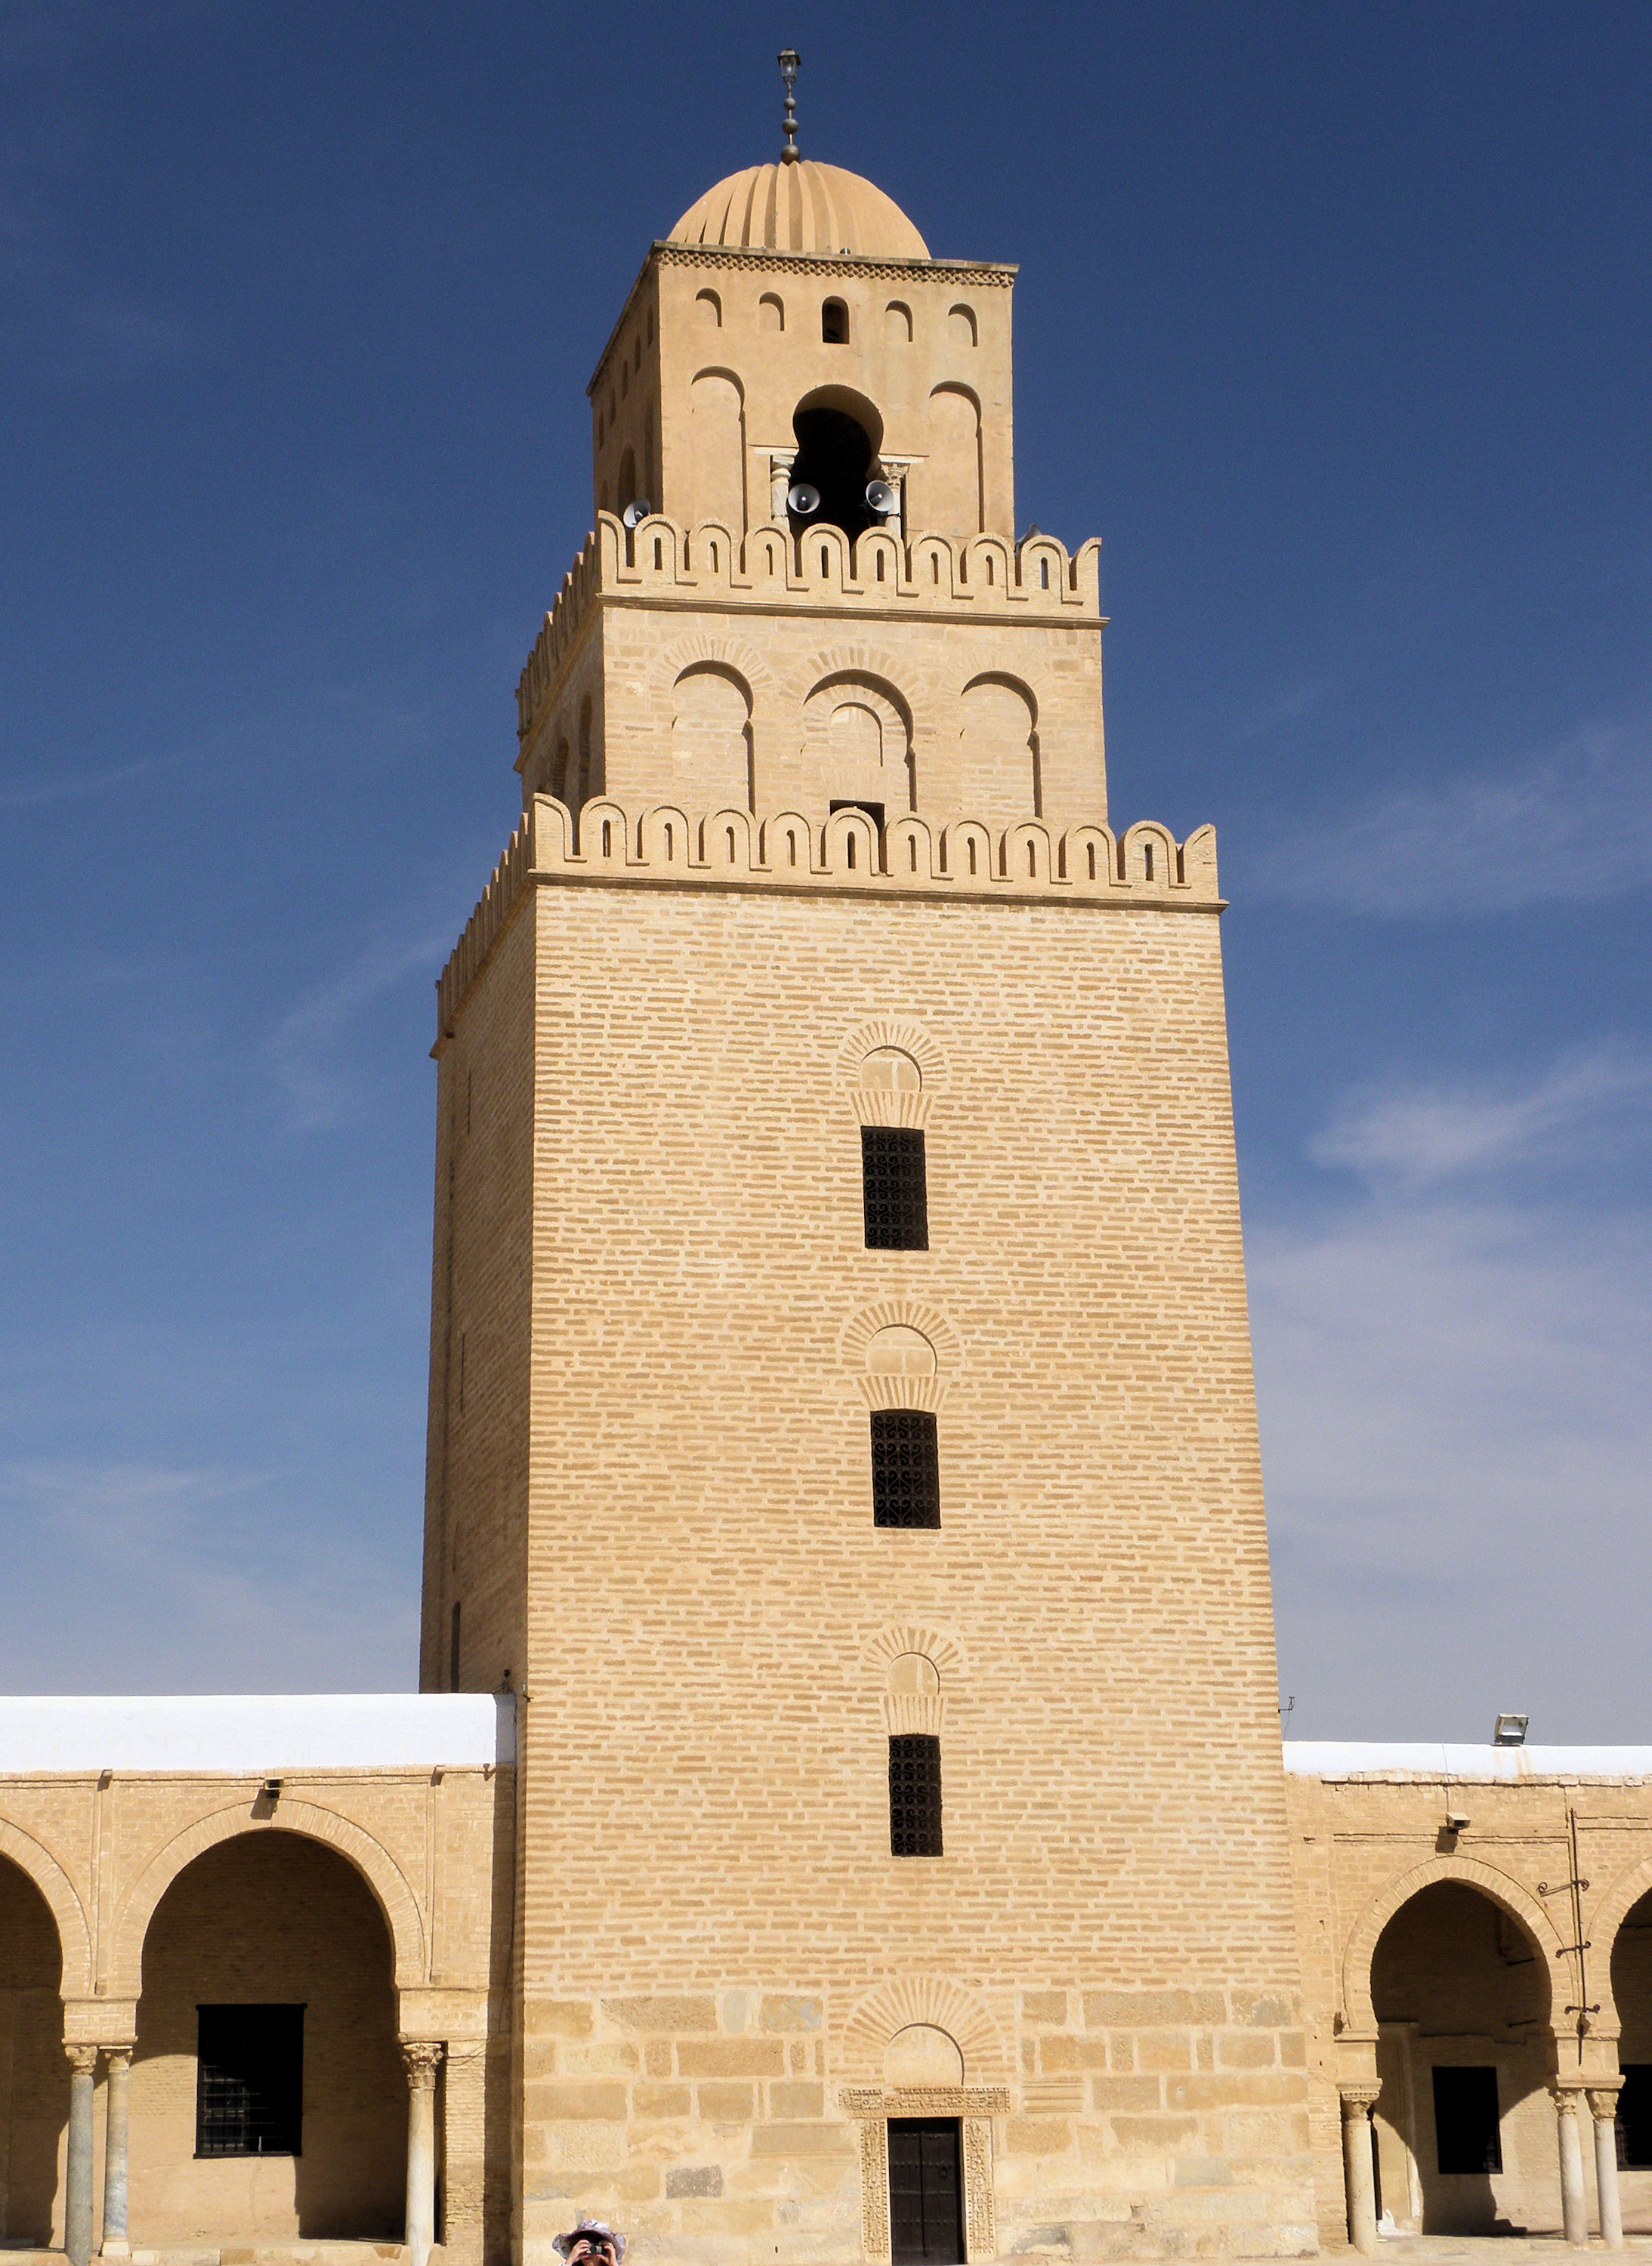 File:Minaret of the Great Mosque of Kairouan, Tunisia.jpg - Wikimedia